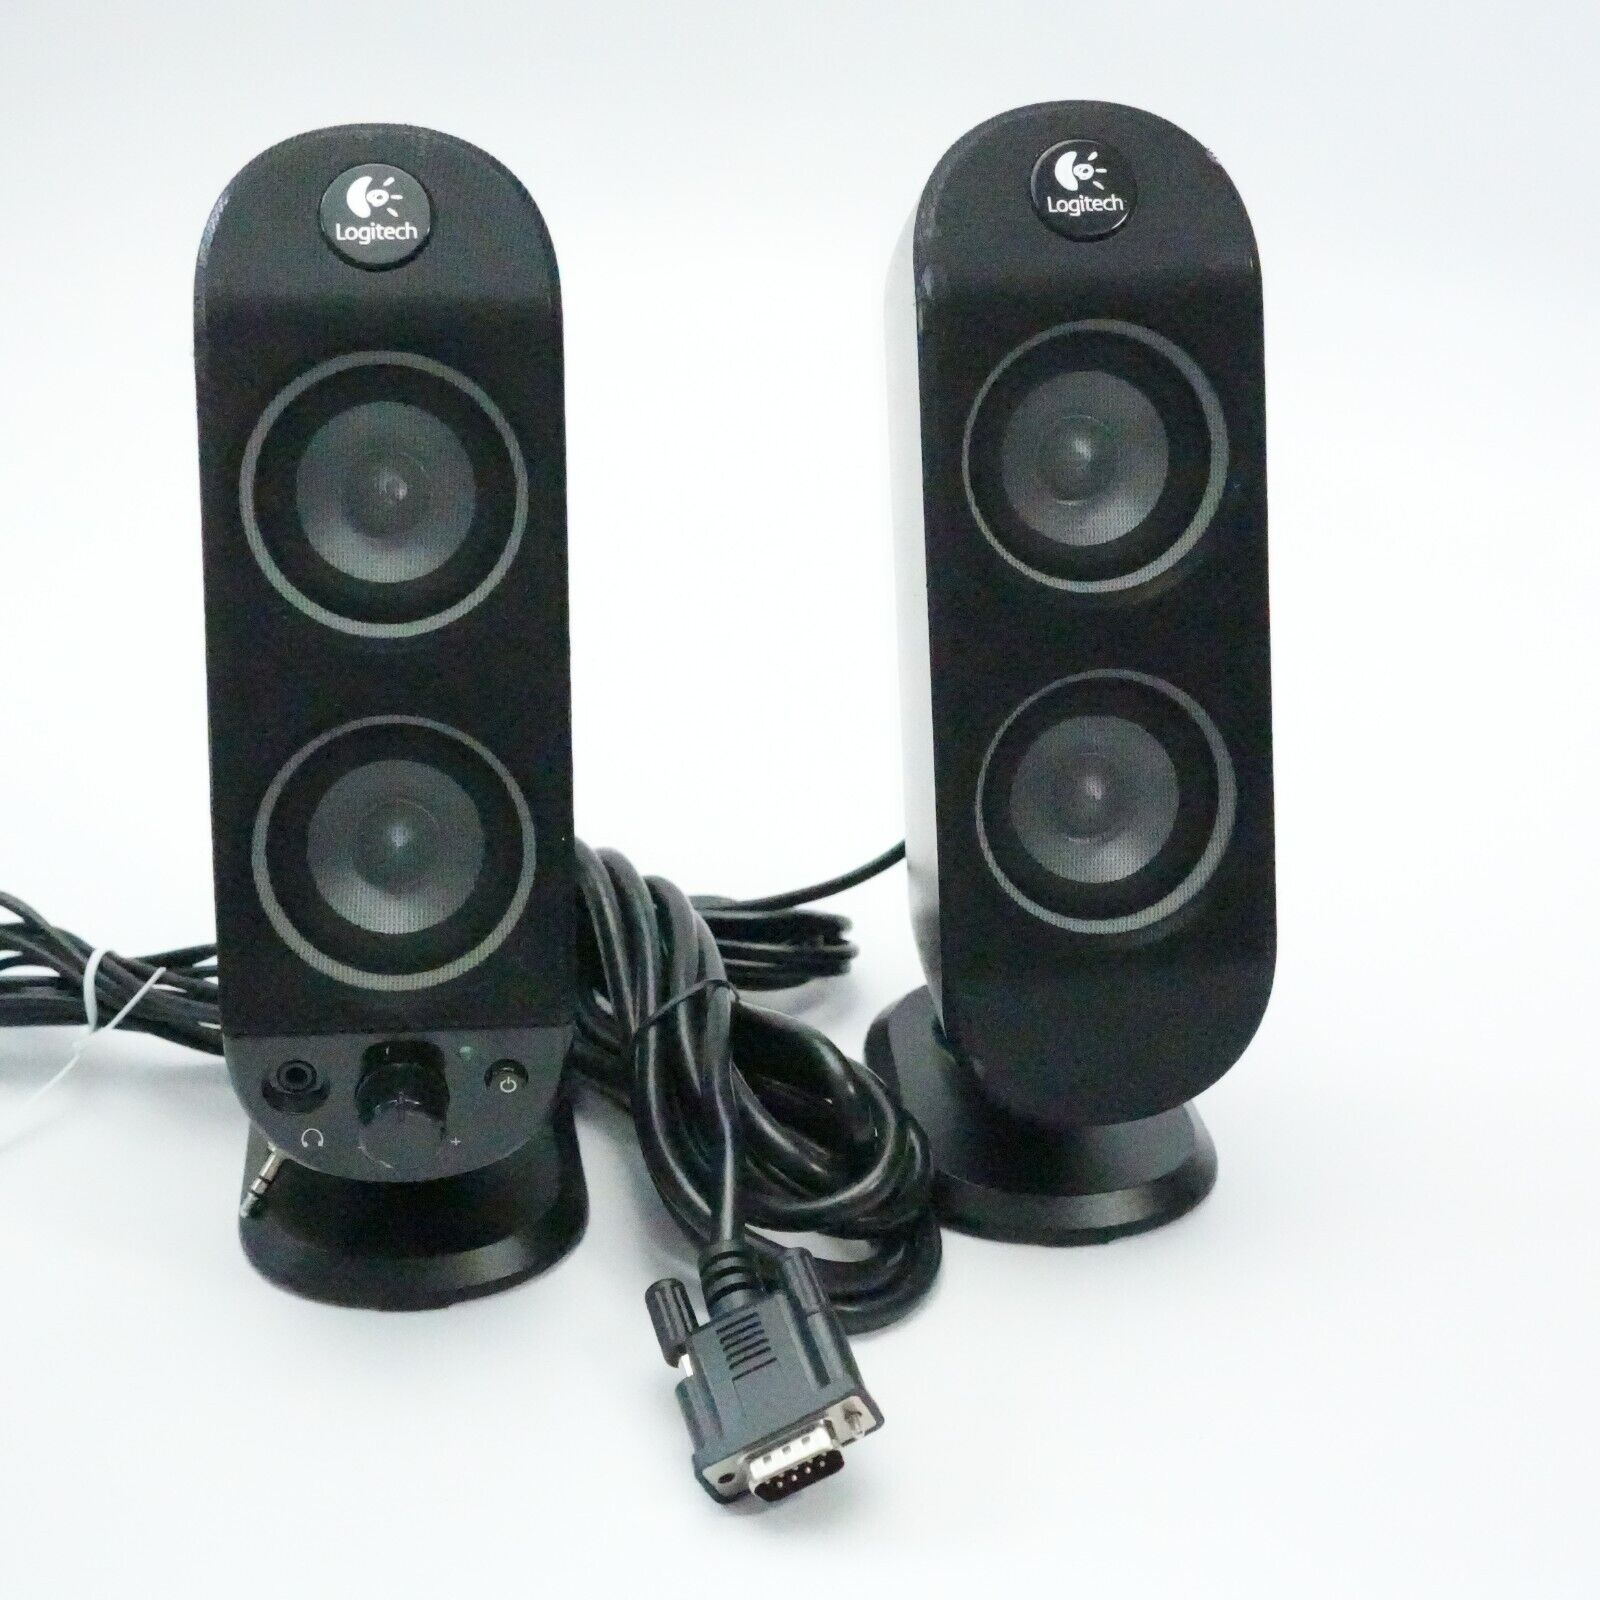 Pair of Logitech X-230 Computer Speakers - No Sub